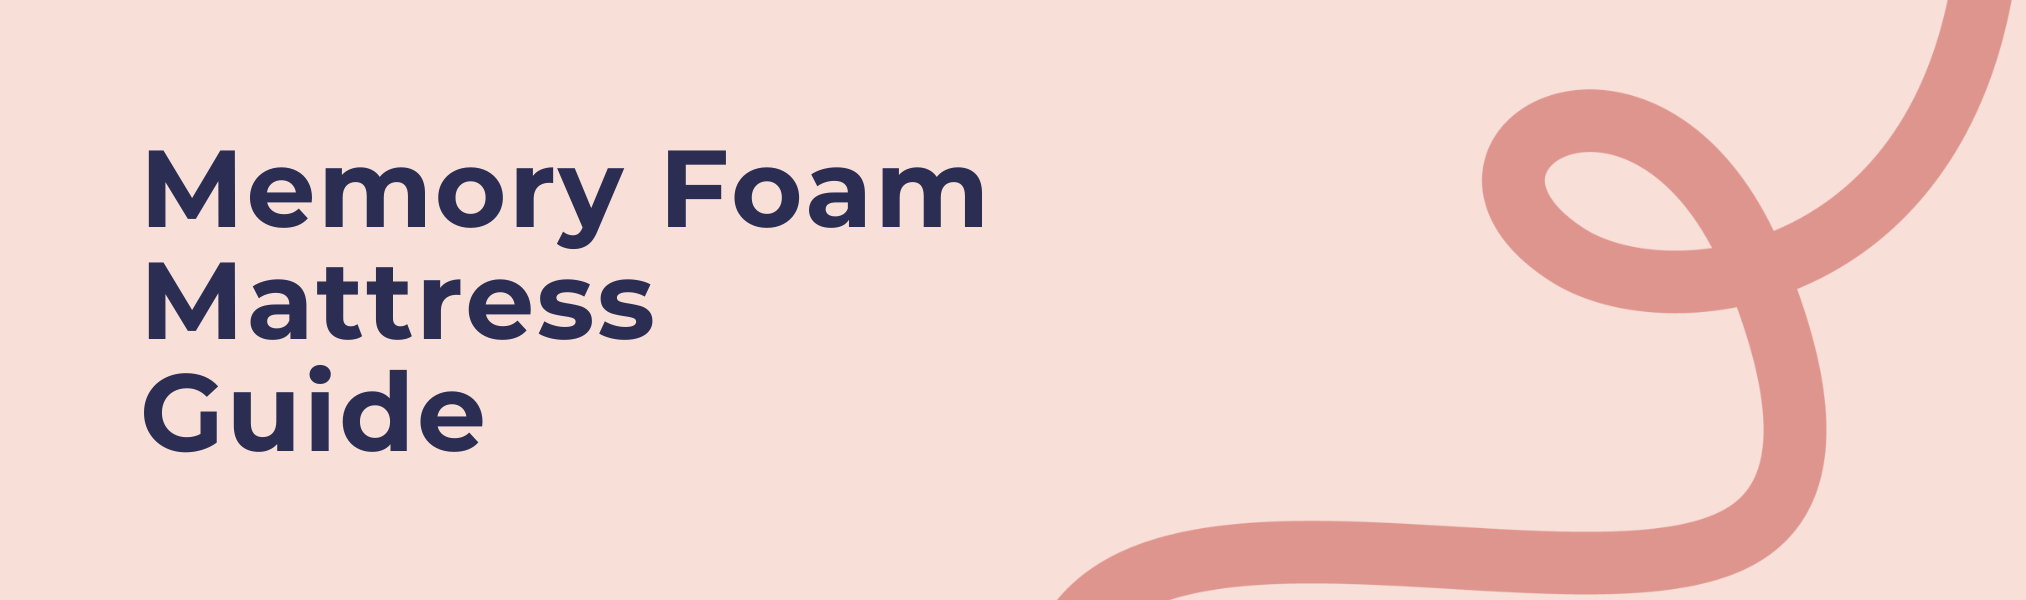 Memory Foam Mattress Guide